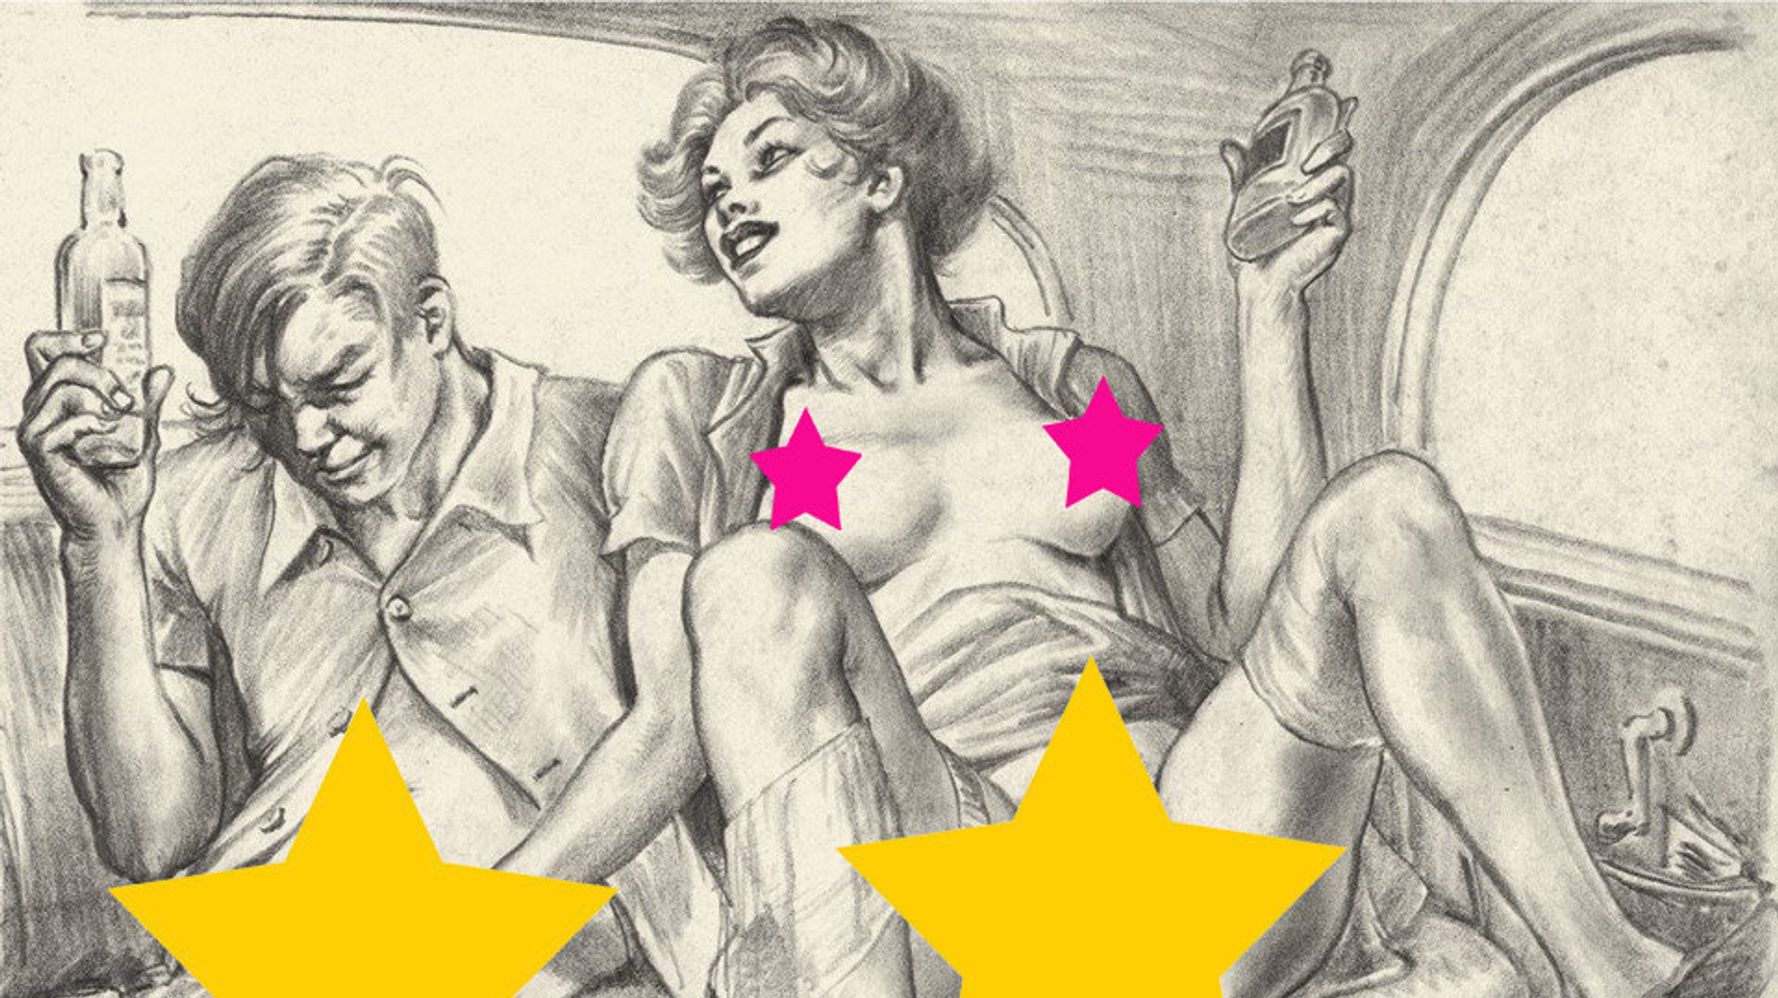 Drawn 1940s Porn - The Strange Case Of Thomas Poulton, An Erotic Artist In The 1940s (NSFW) |  HuffPost